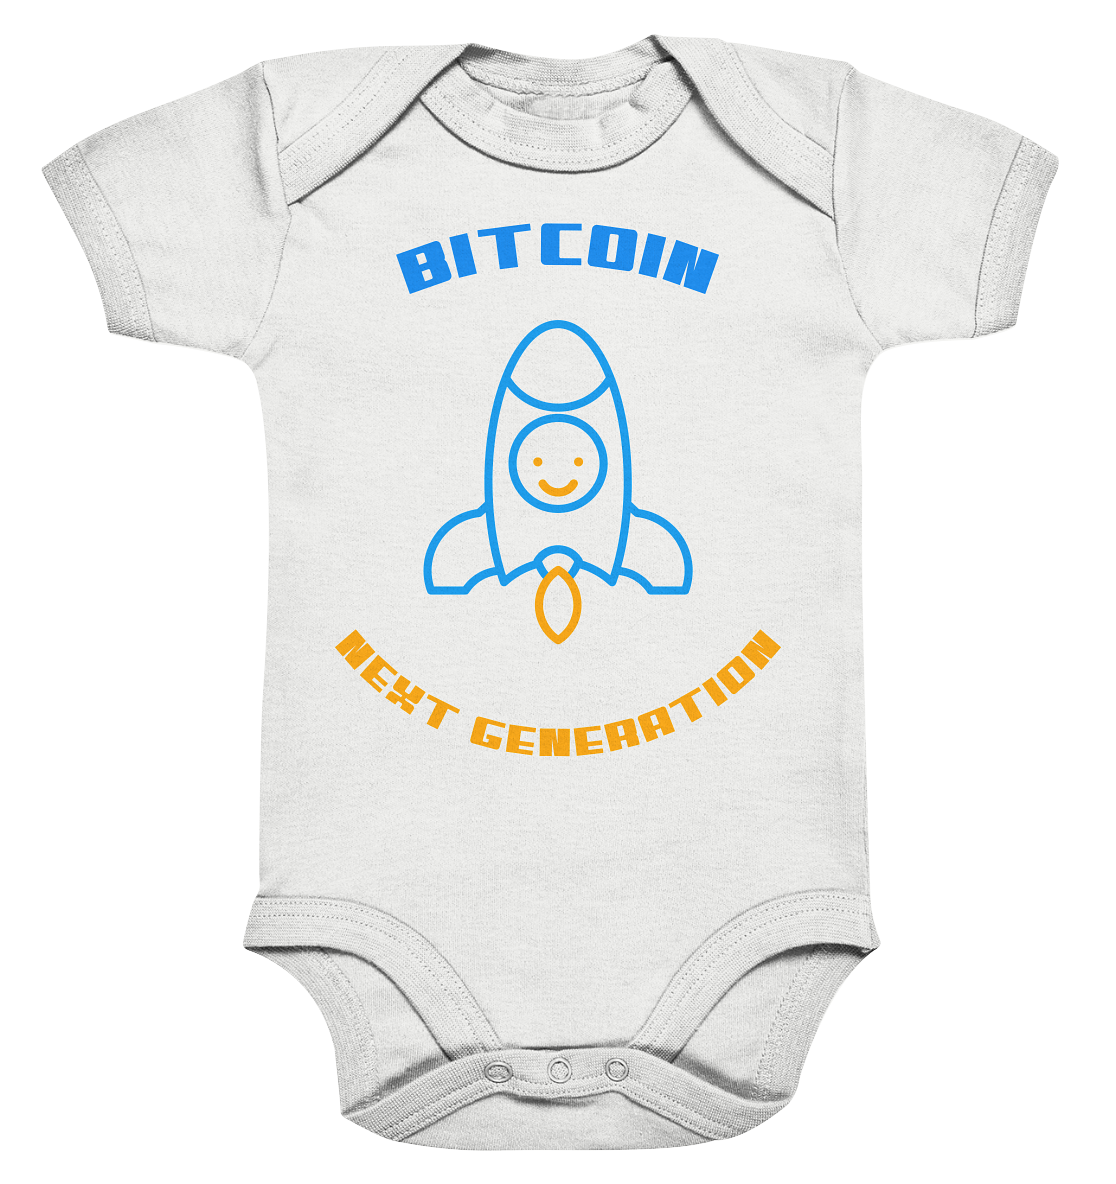 Bitcoin - Next Generation - Organic Baby Bodysuite